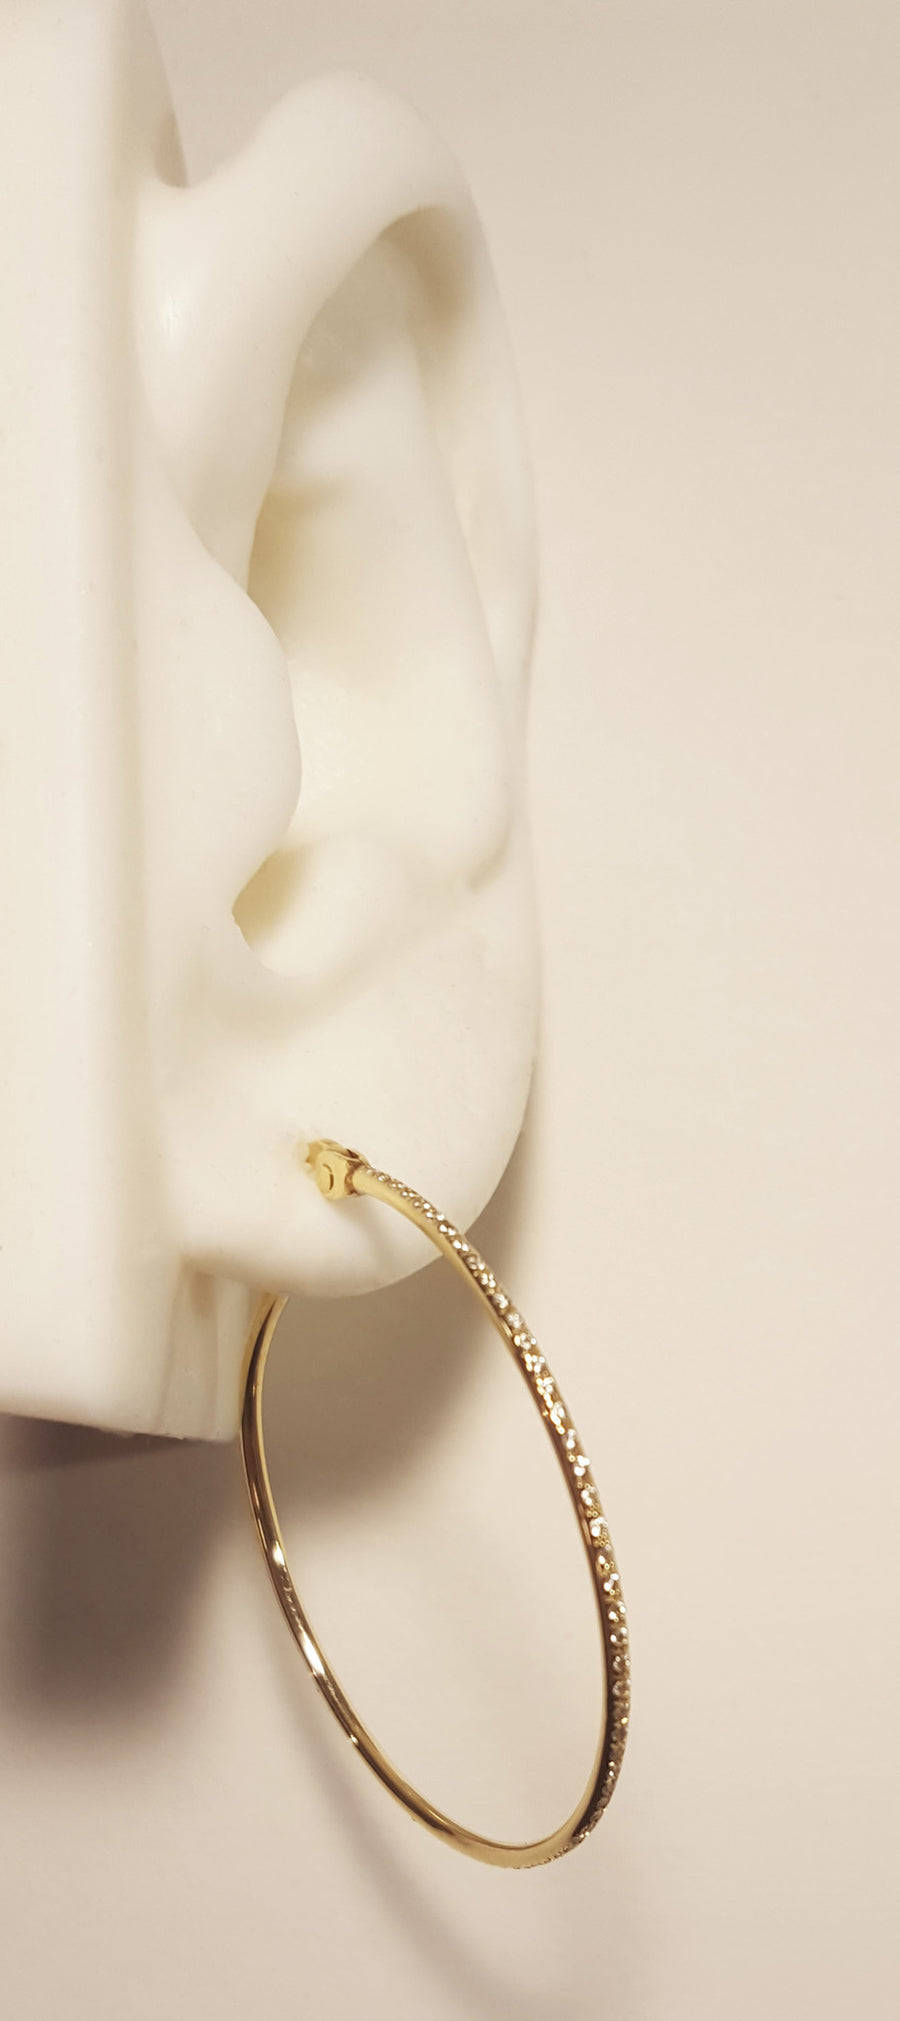 Micro Pave Diamonds 35mm Large Hoop Single Earring Wendy Nichol Fine Jewelry Designer Handmade in NYC solid 14k Gold Black Diamonds White Diamonds 